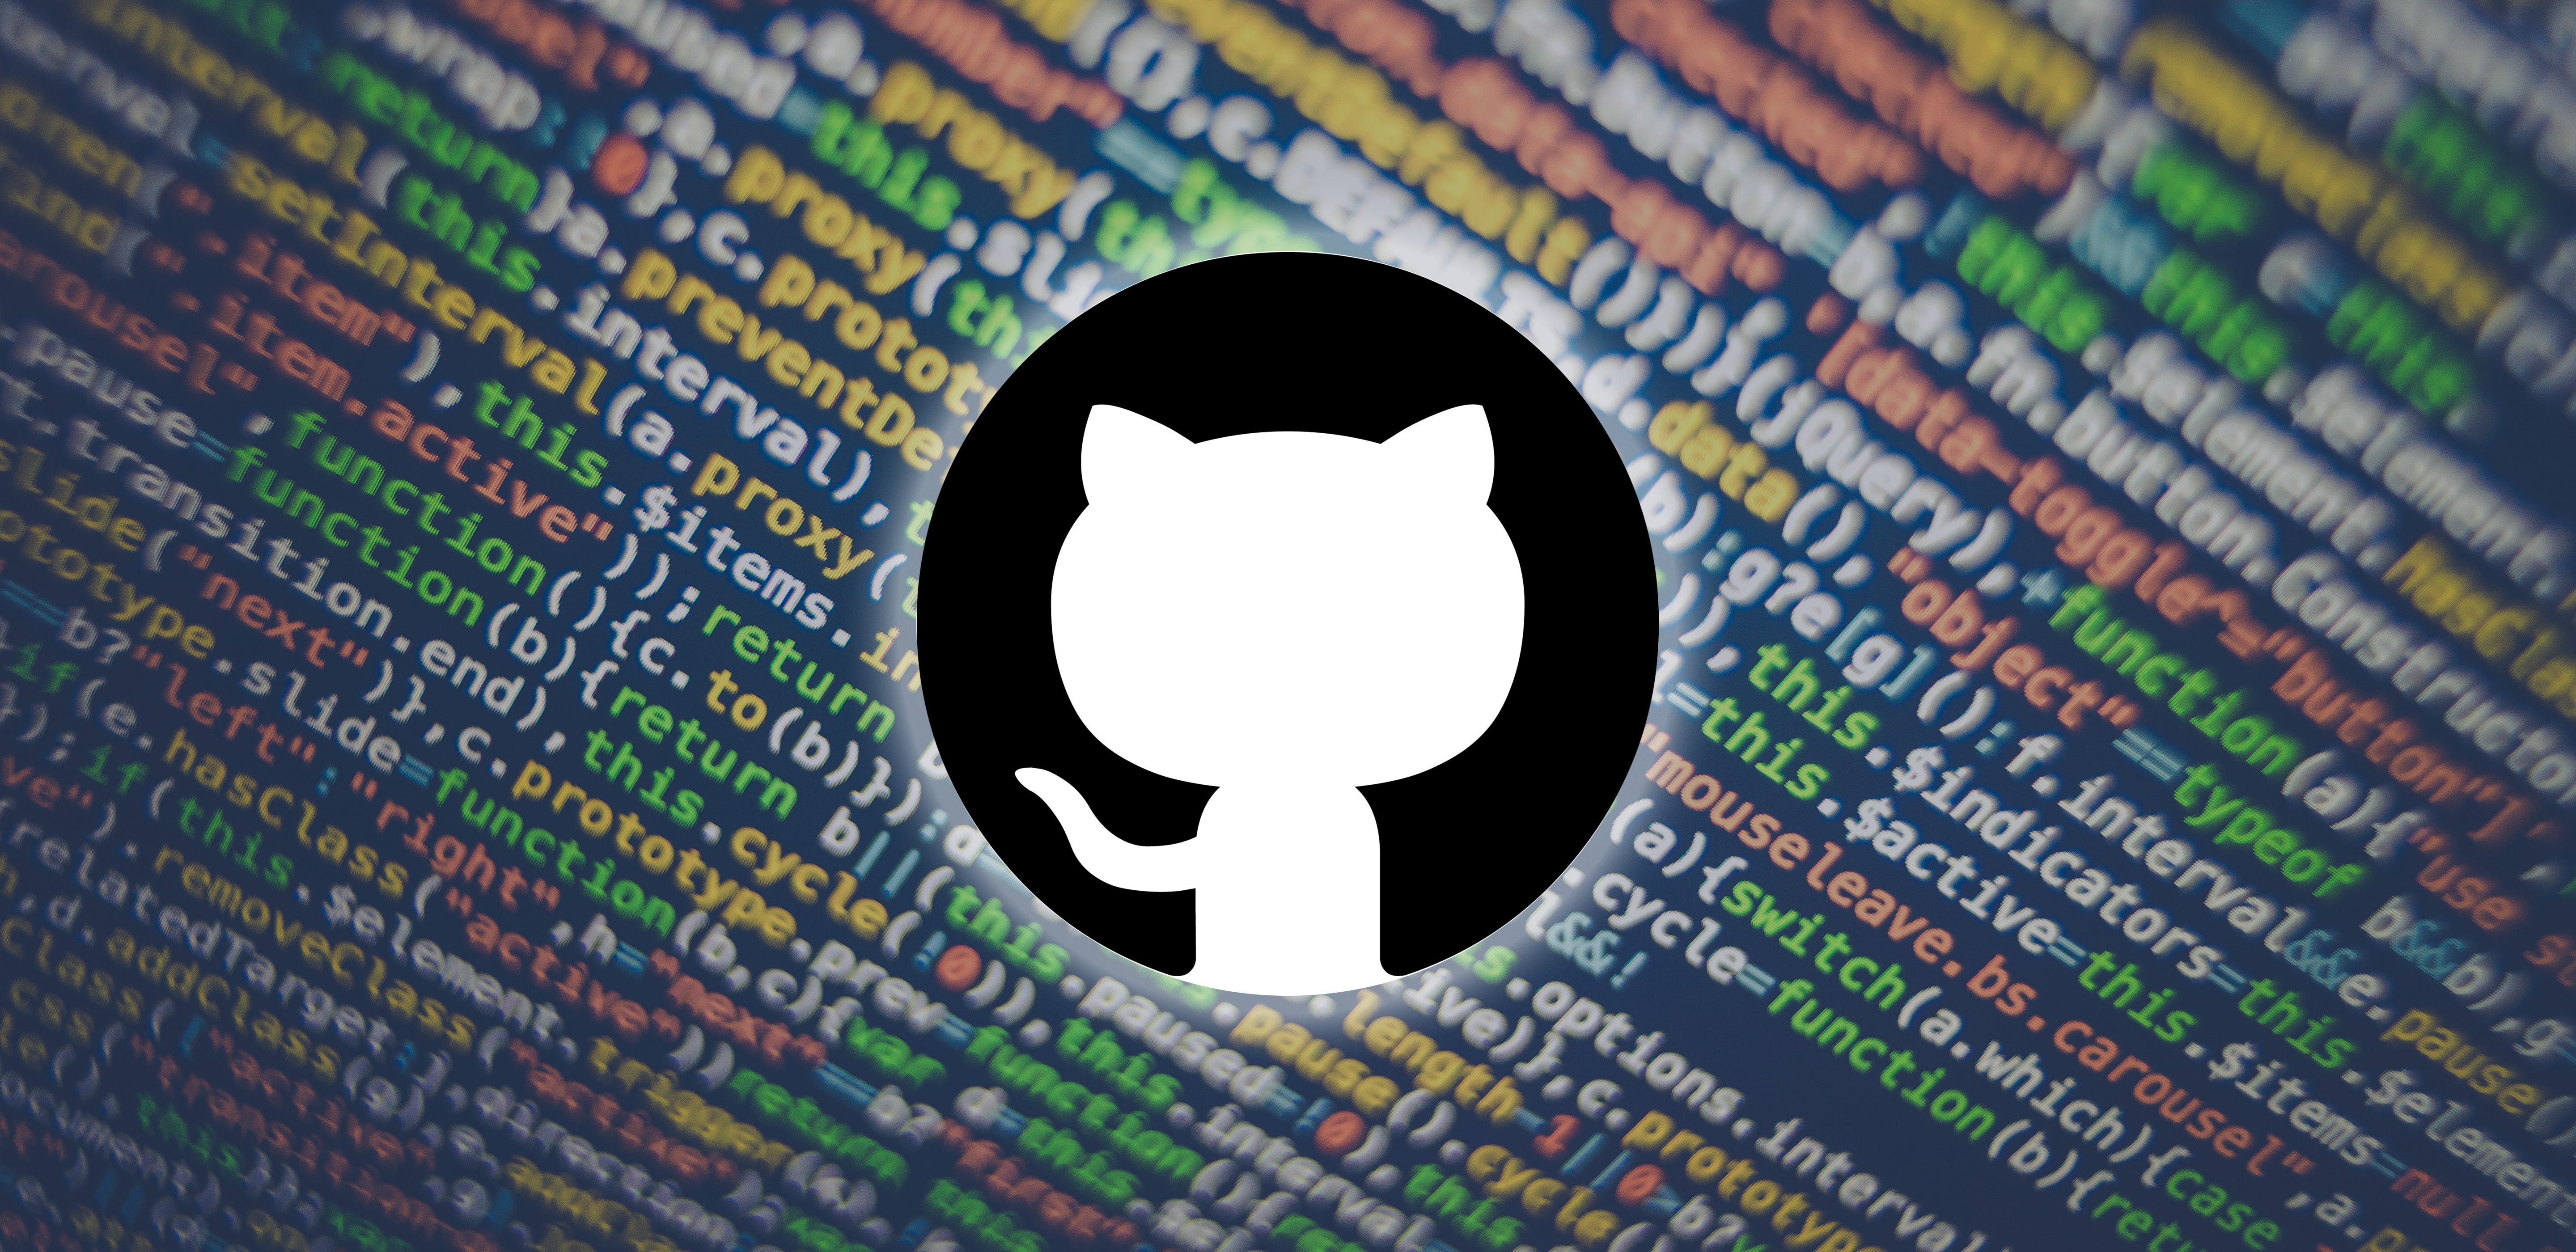 php-badges · GitHub Topics · GitHub